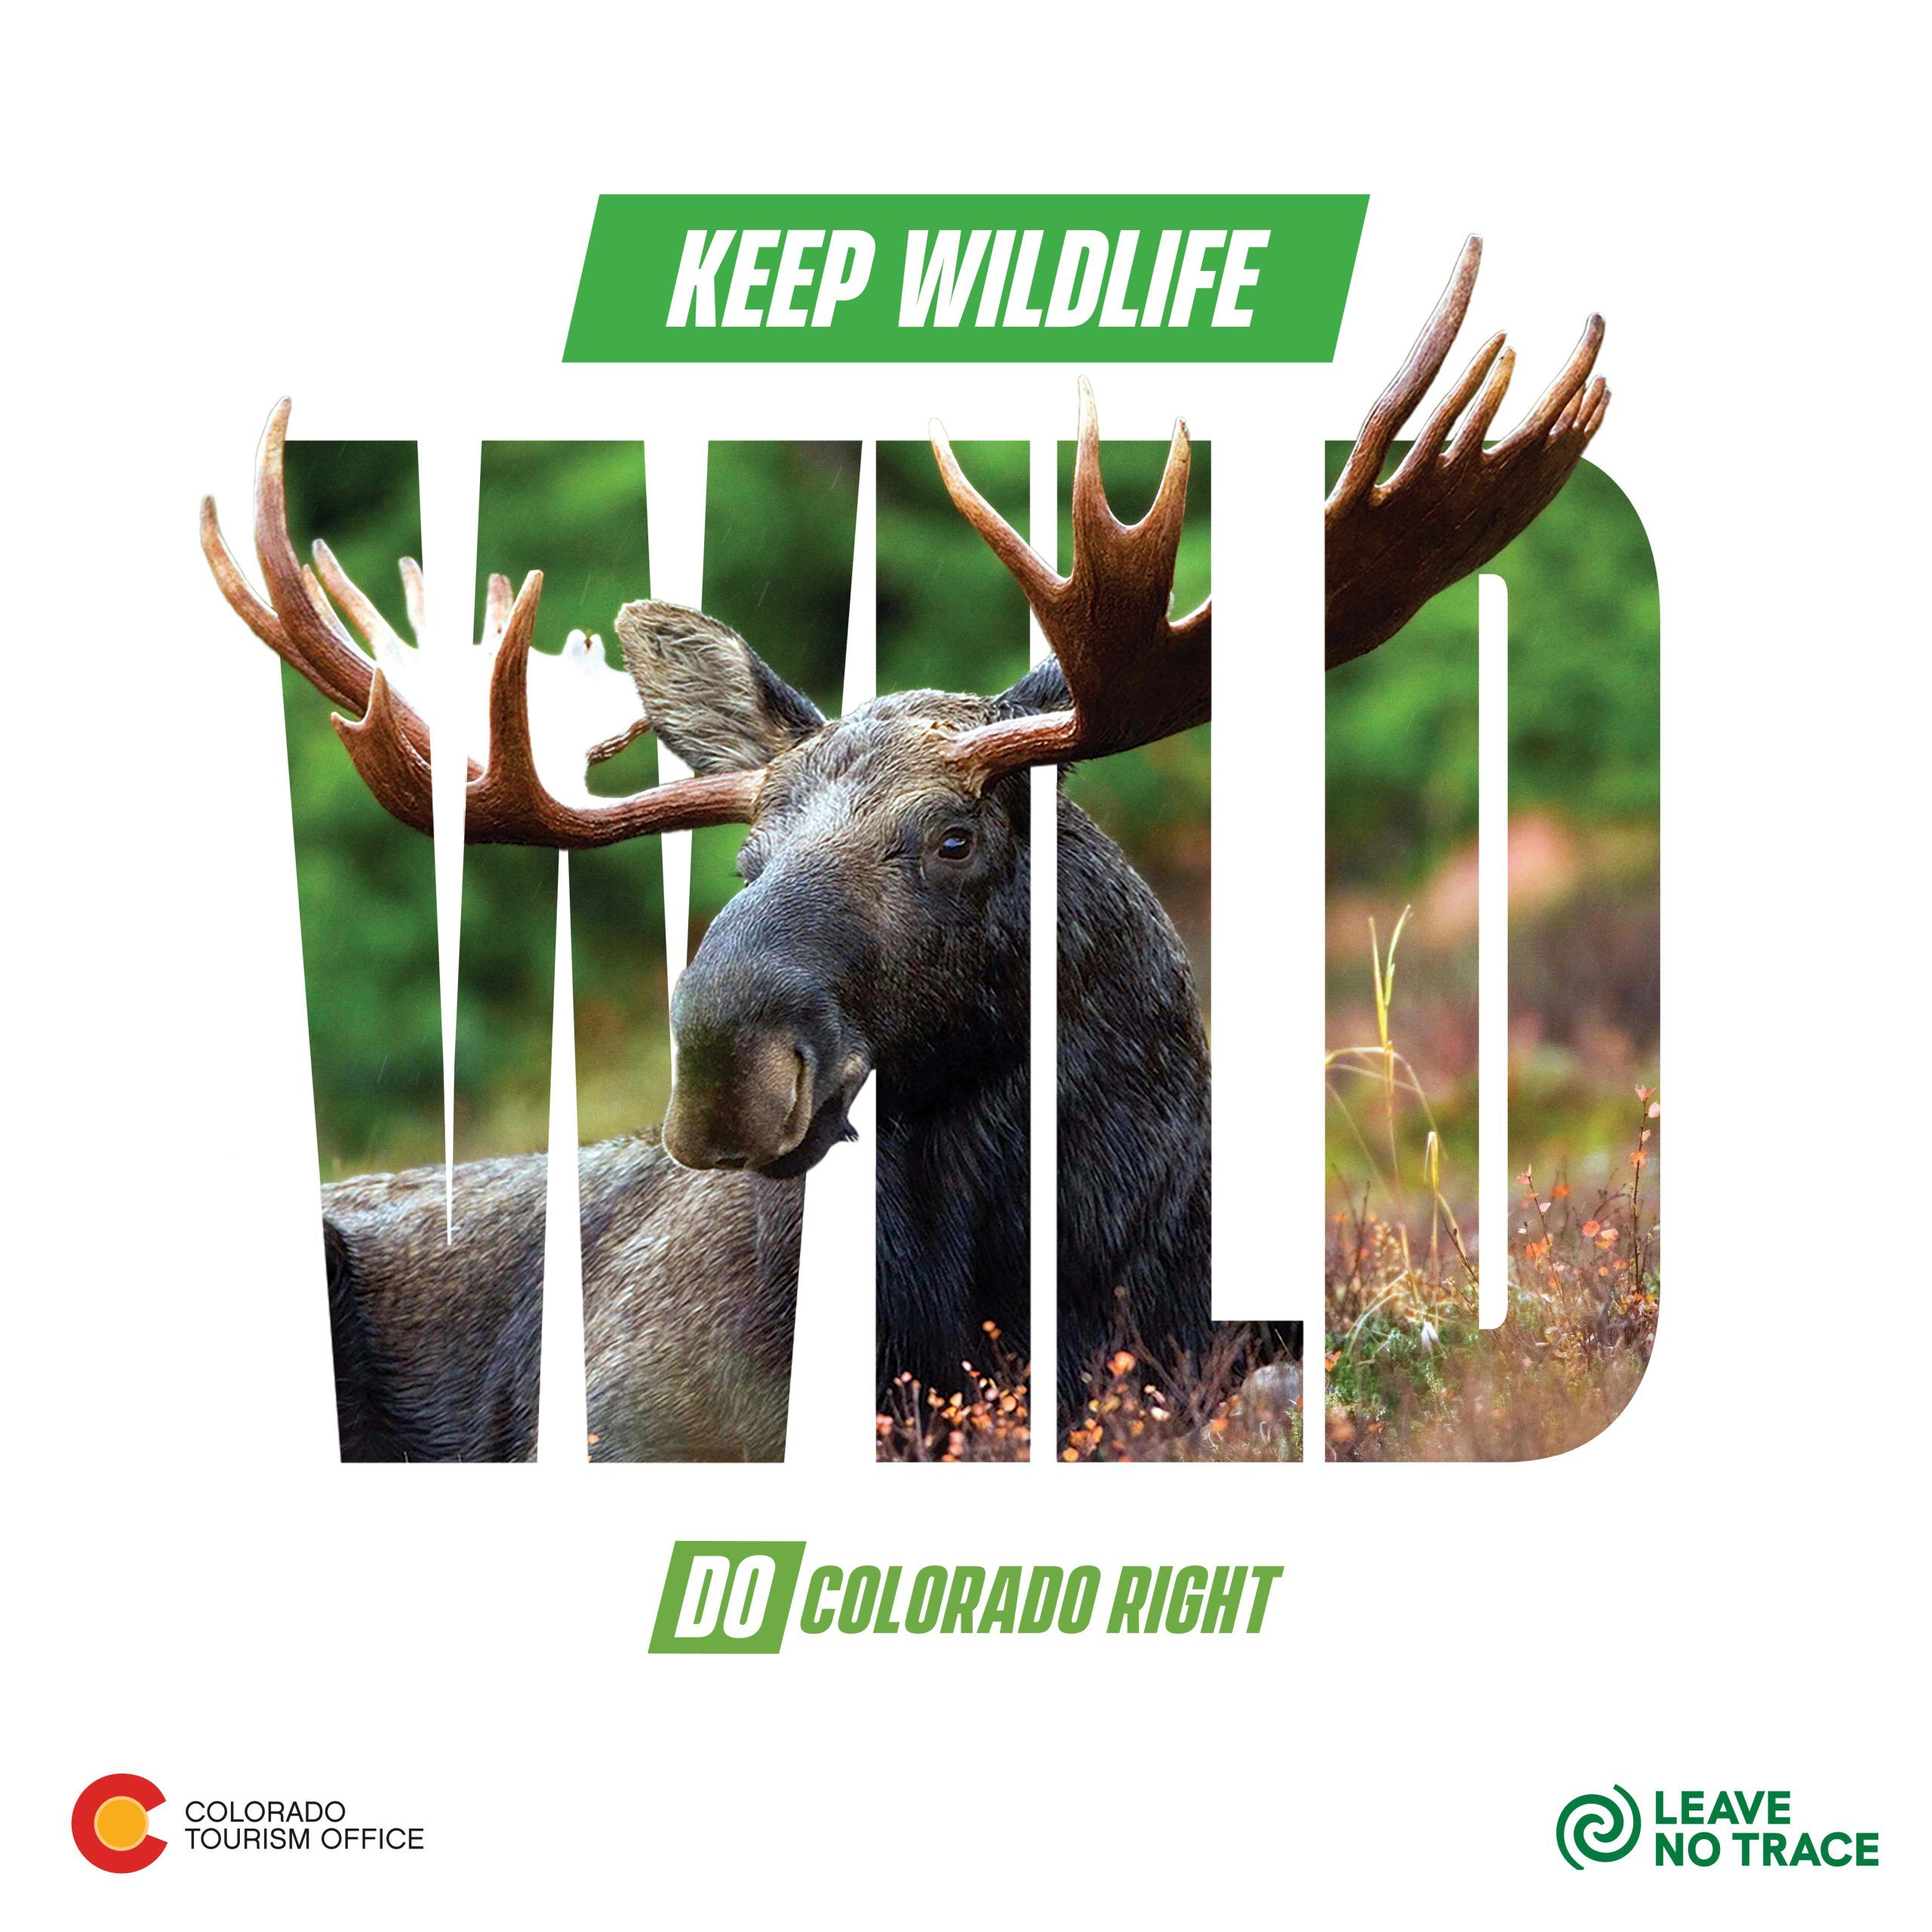 Keep wildlife wild